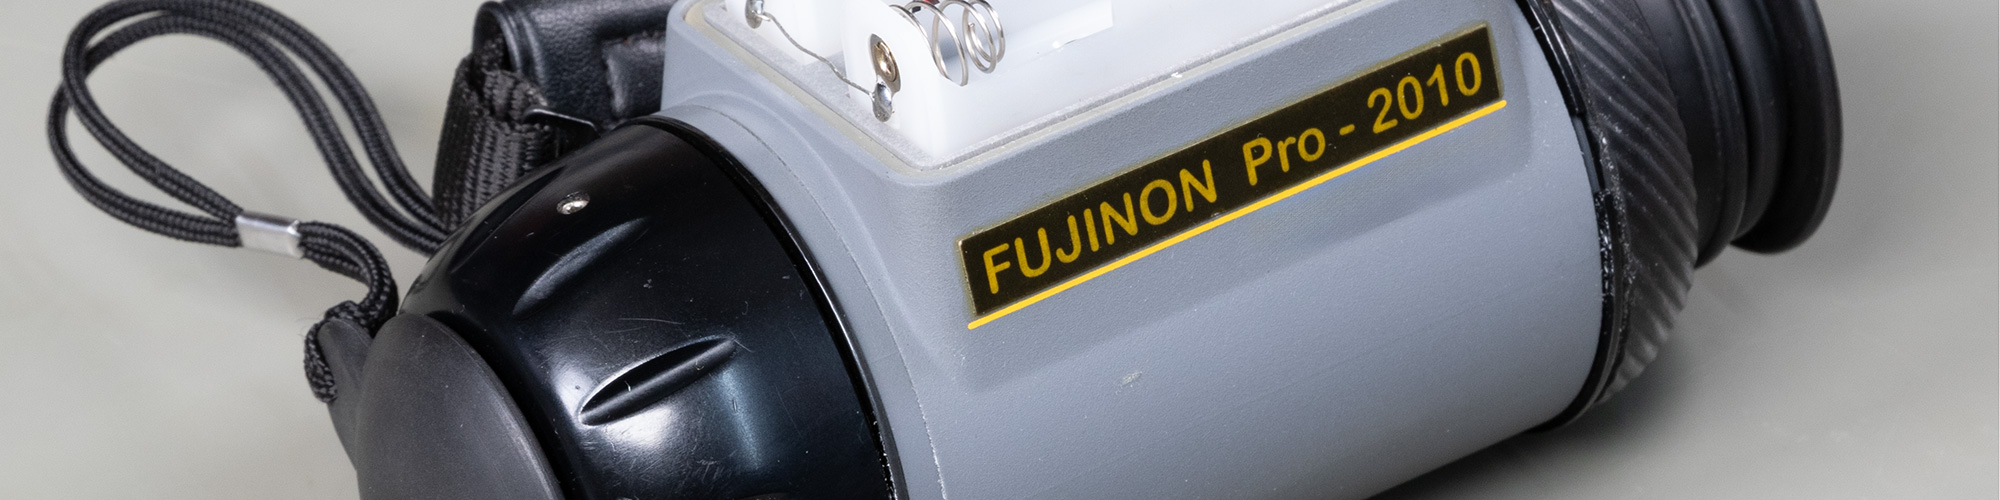 Fujinon Pro 2010 night vision monocular teardown and repair